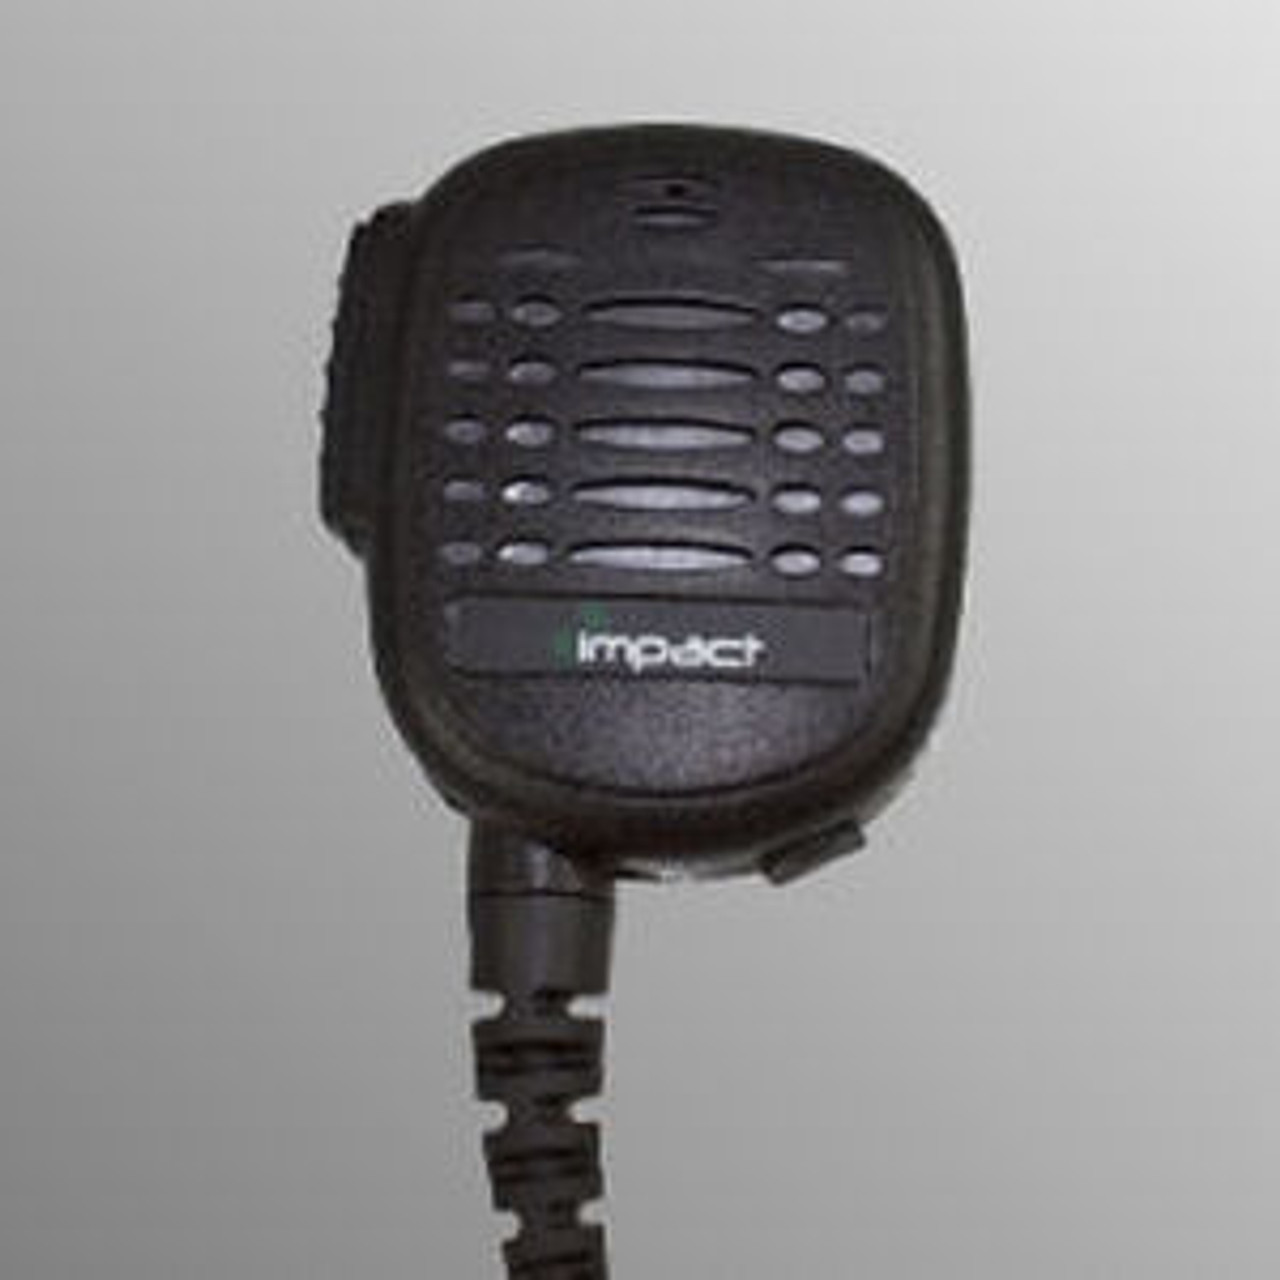 Kenwood NX-5200 Noise Canceling Speaker Mic.